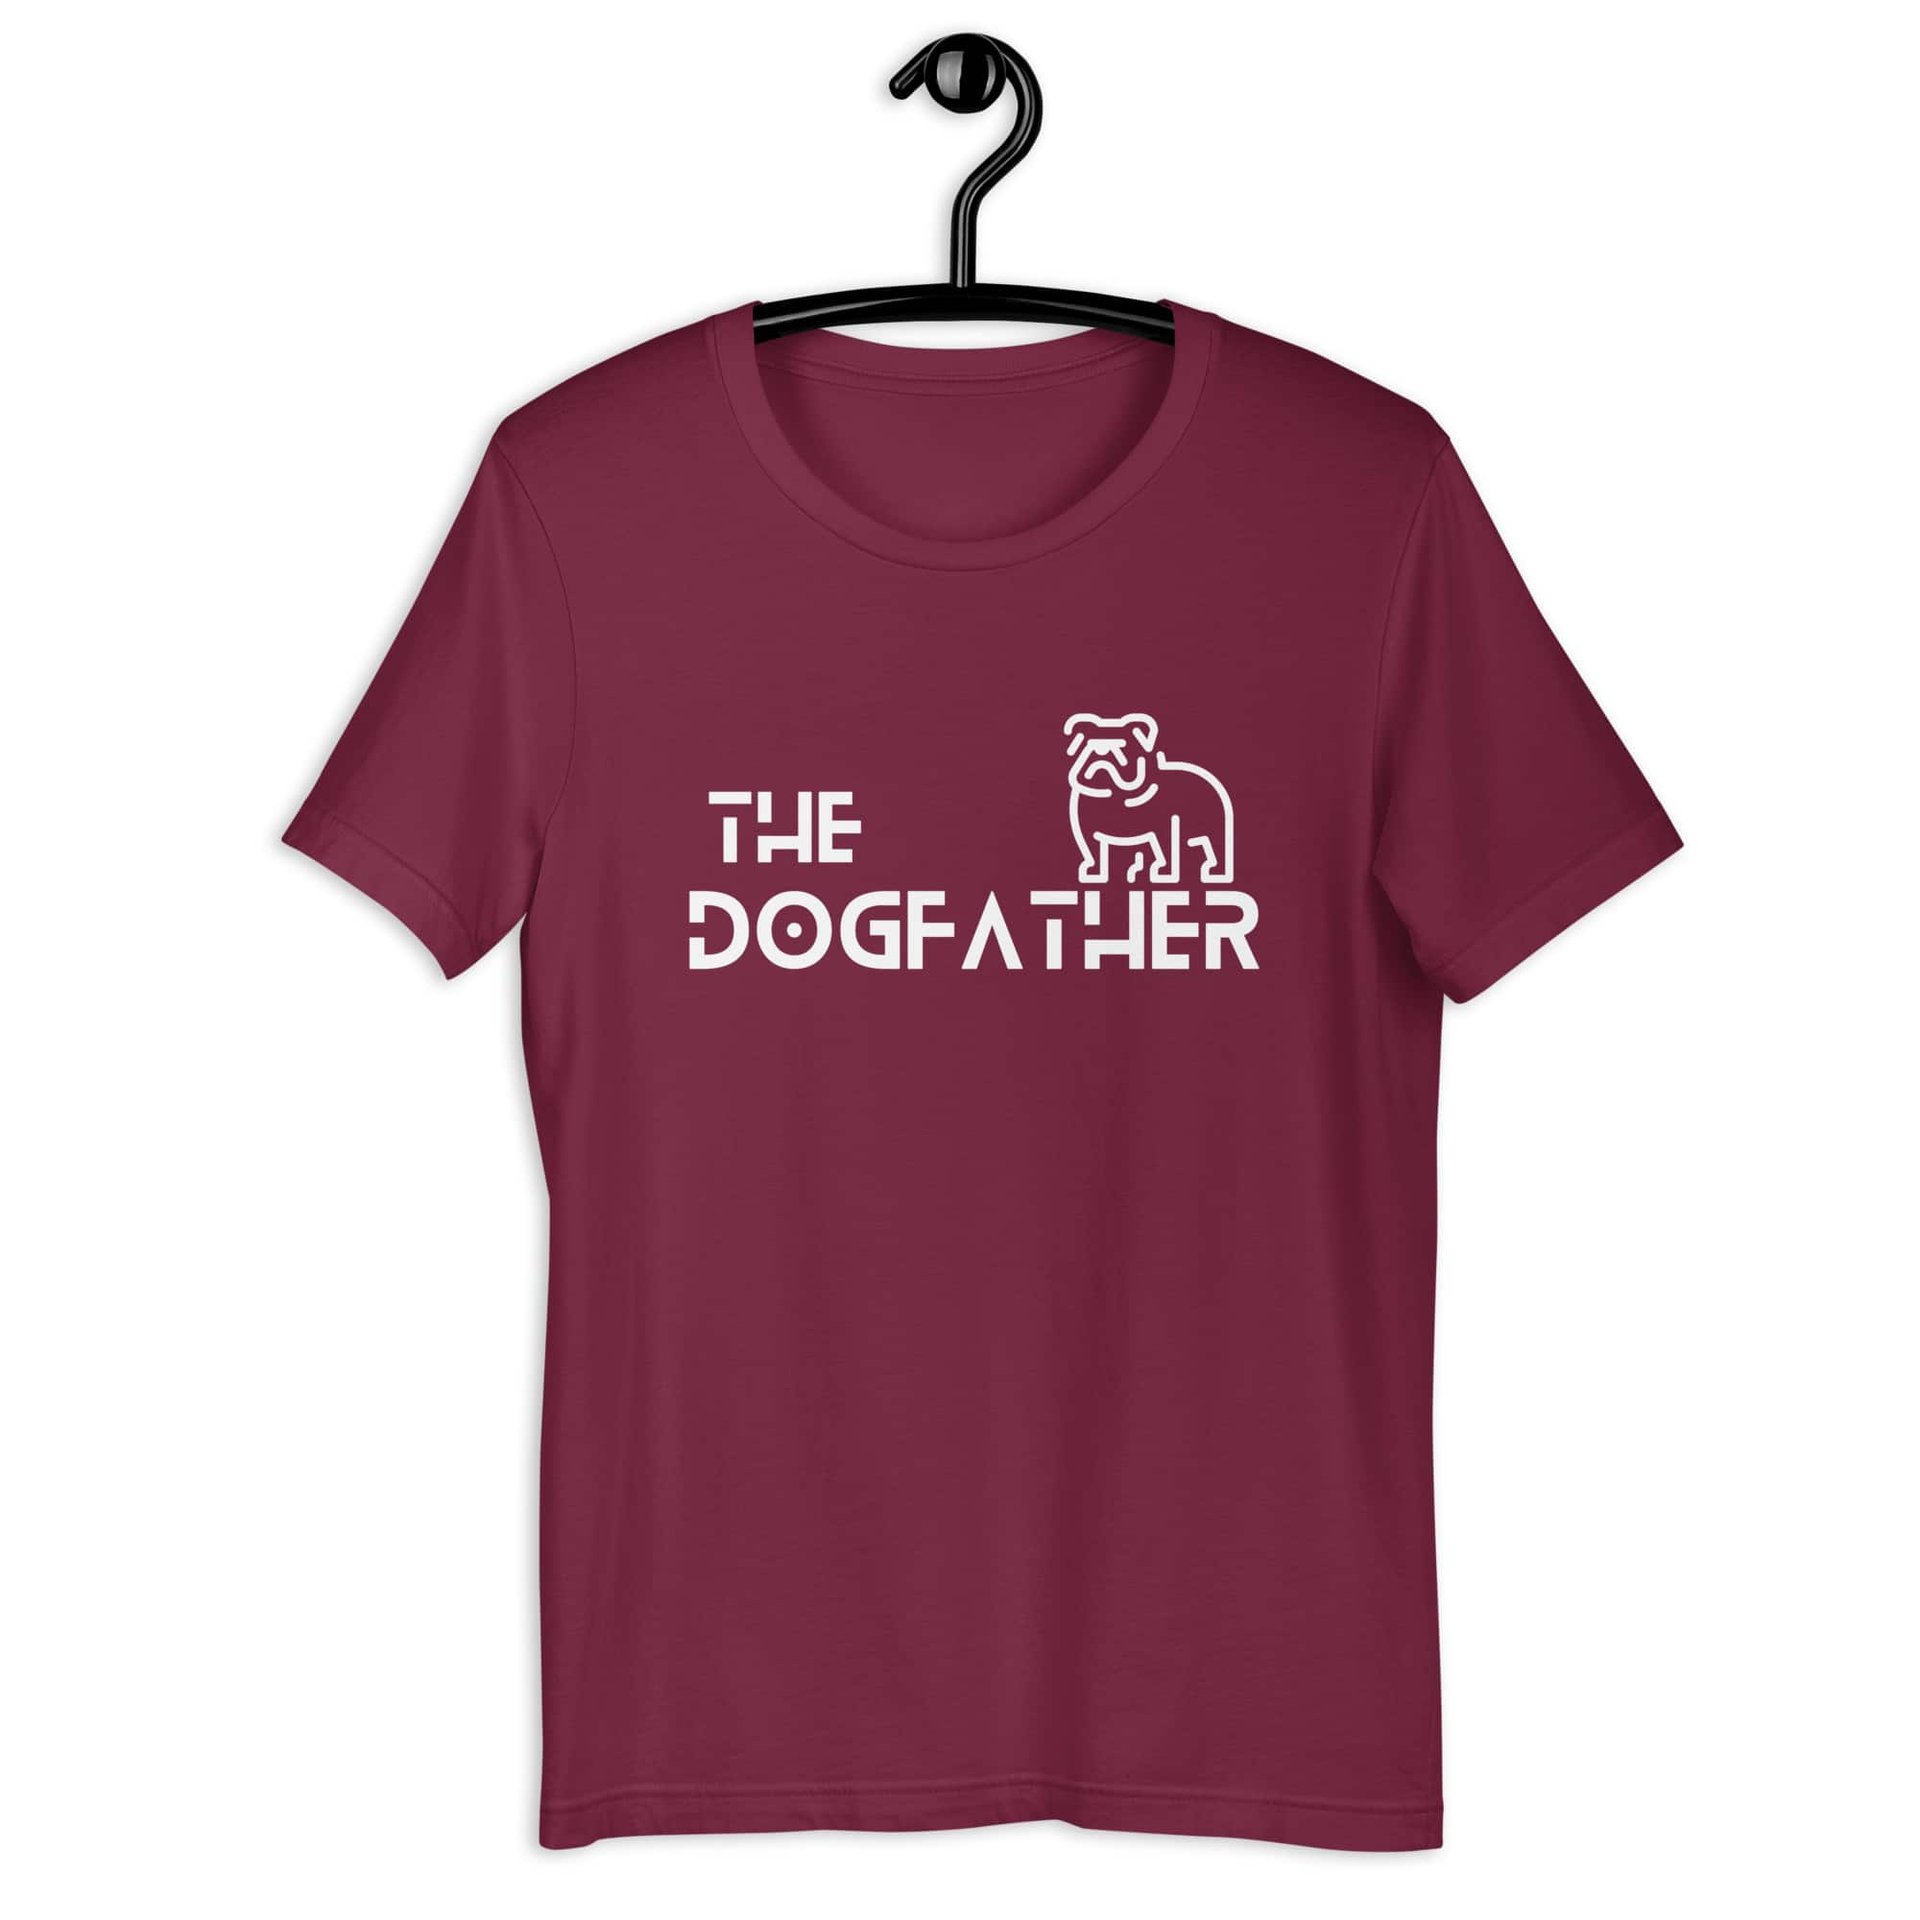 The Dogfather Bulldog Unisex T-Shirt. Maroon